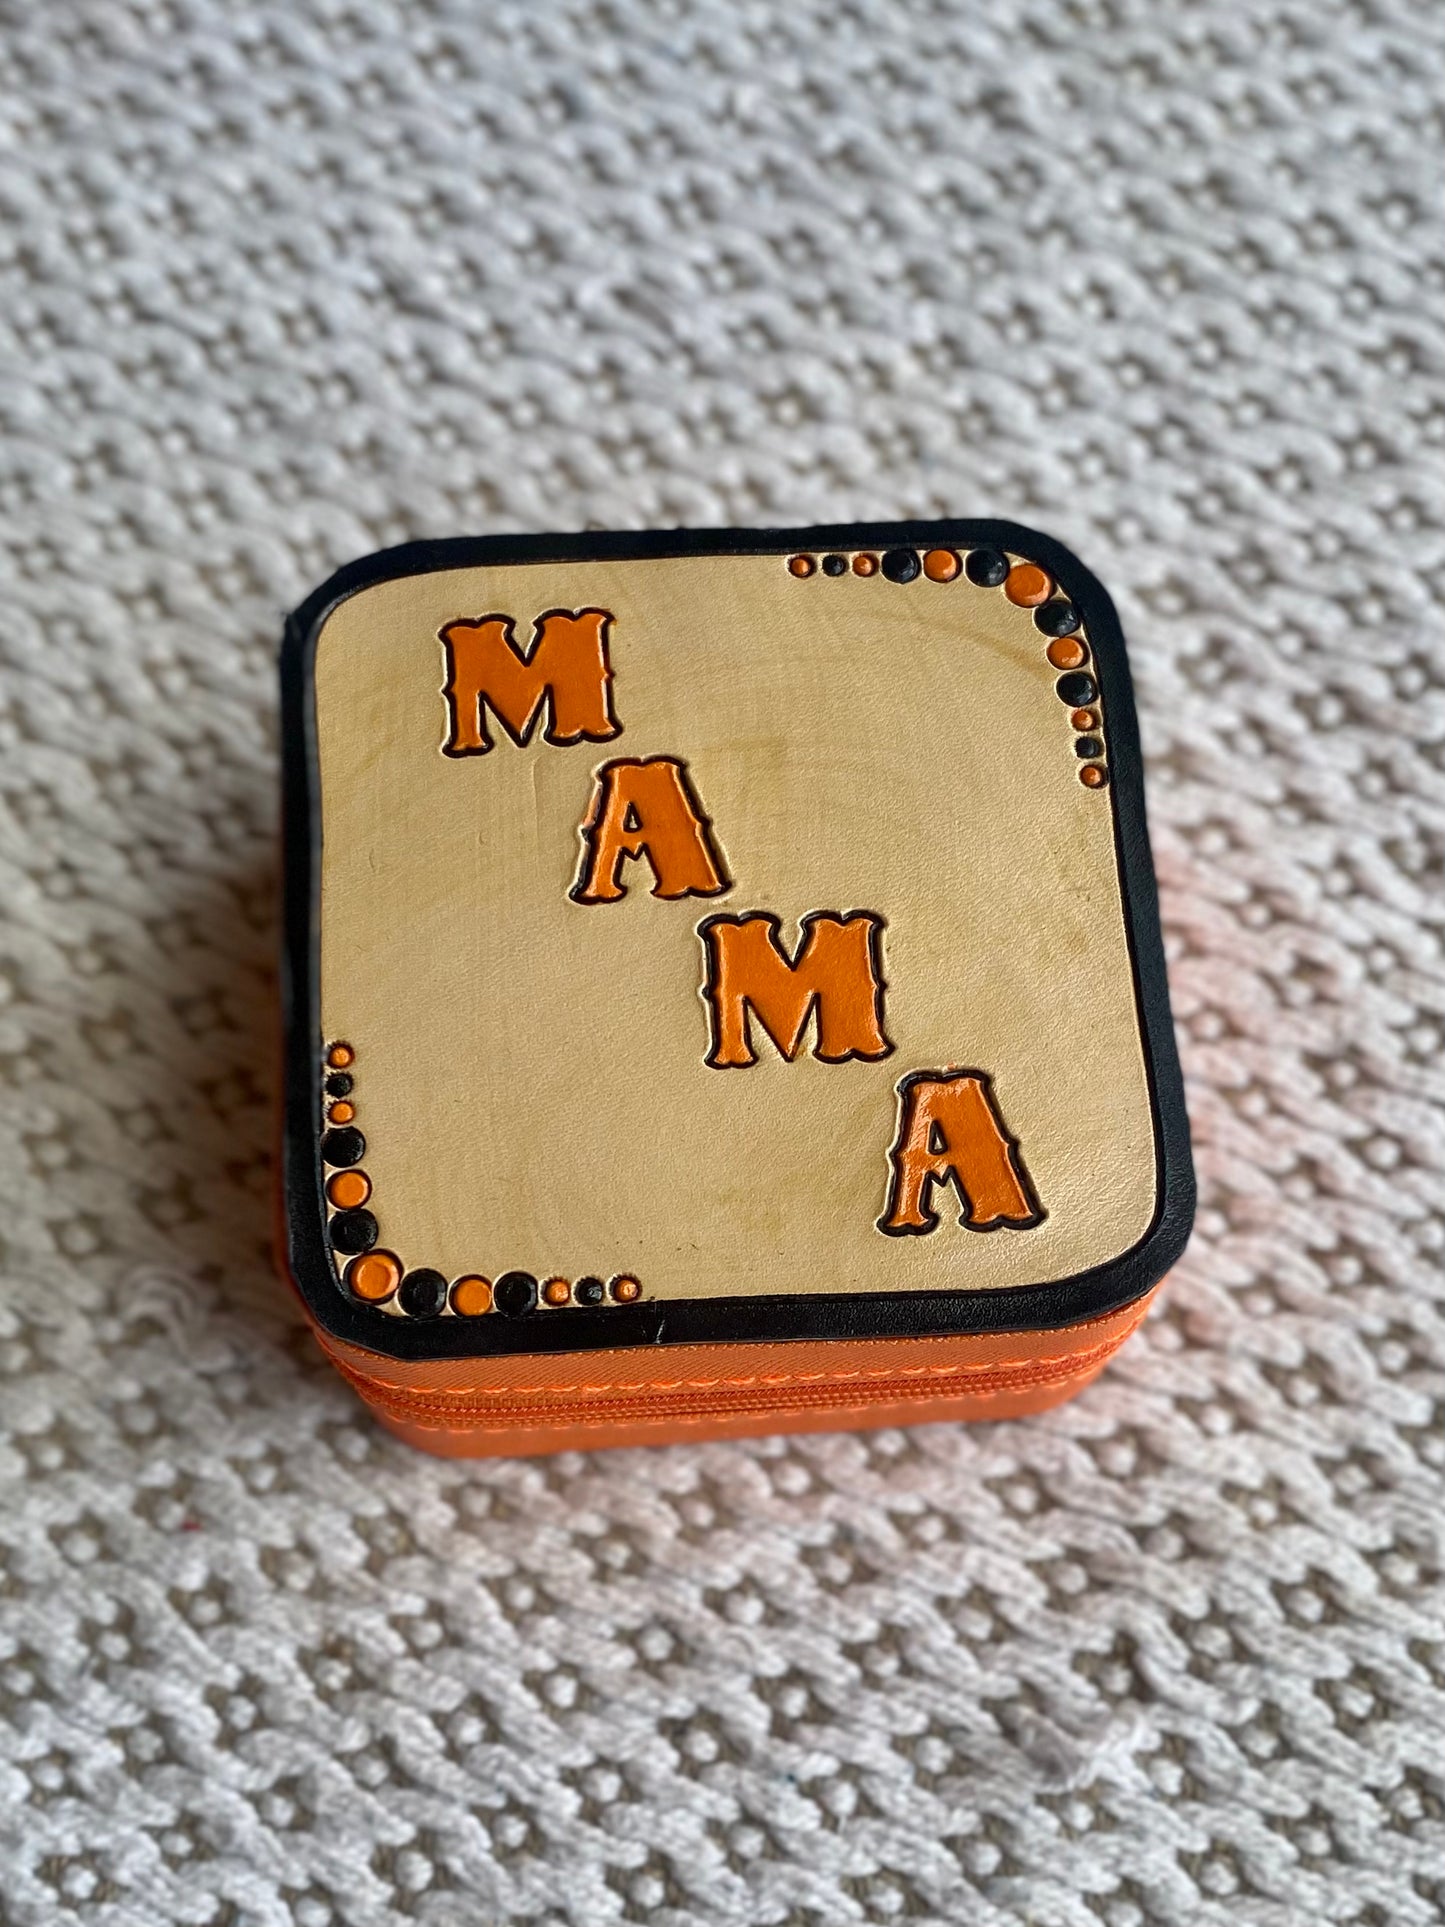 MAMA Travel Jewelry Box